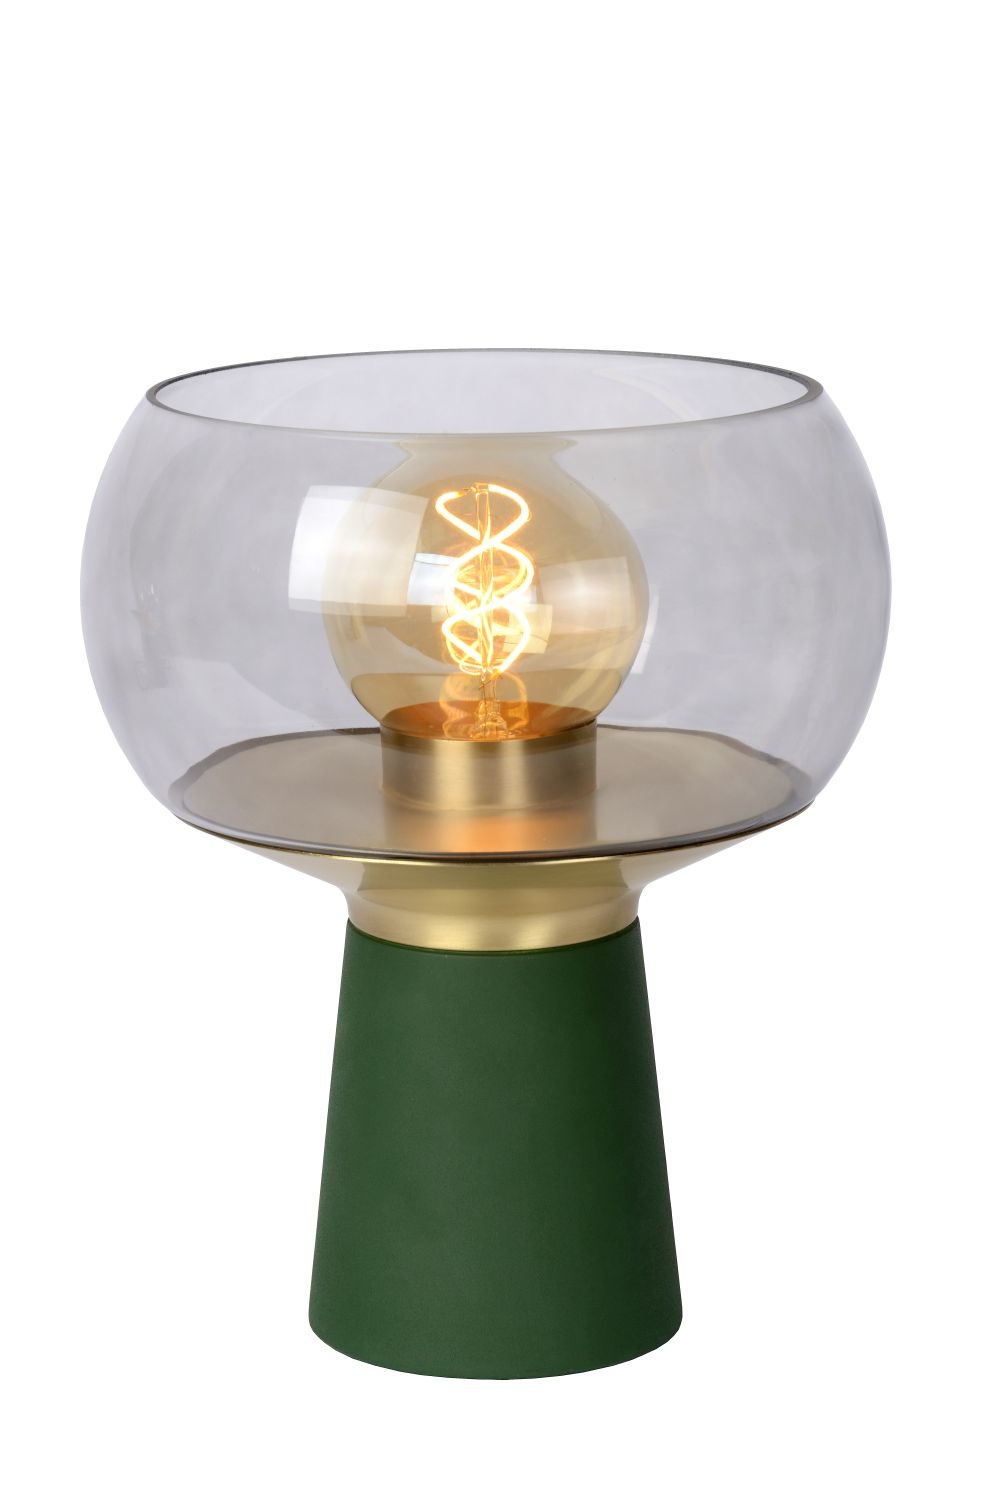 vice versa accent ledematen Groene tafellamp E27 met messing en glas design | My Planet LED